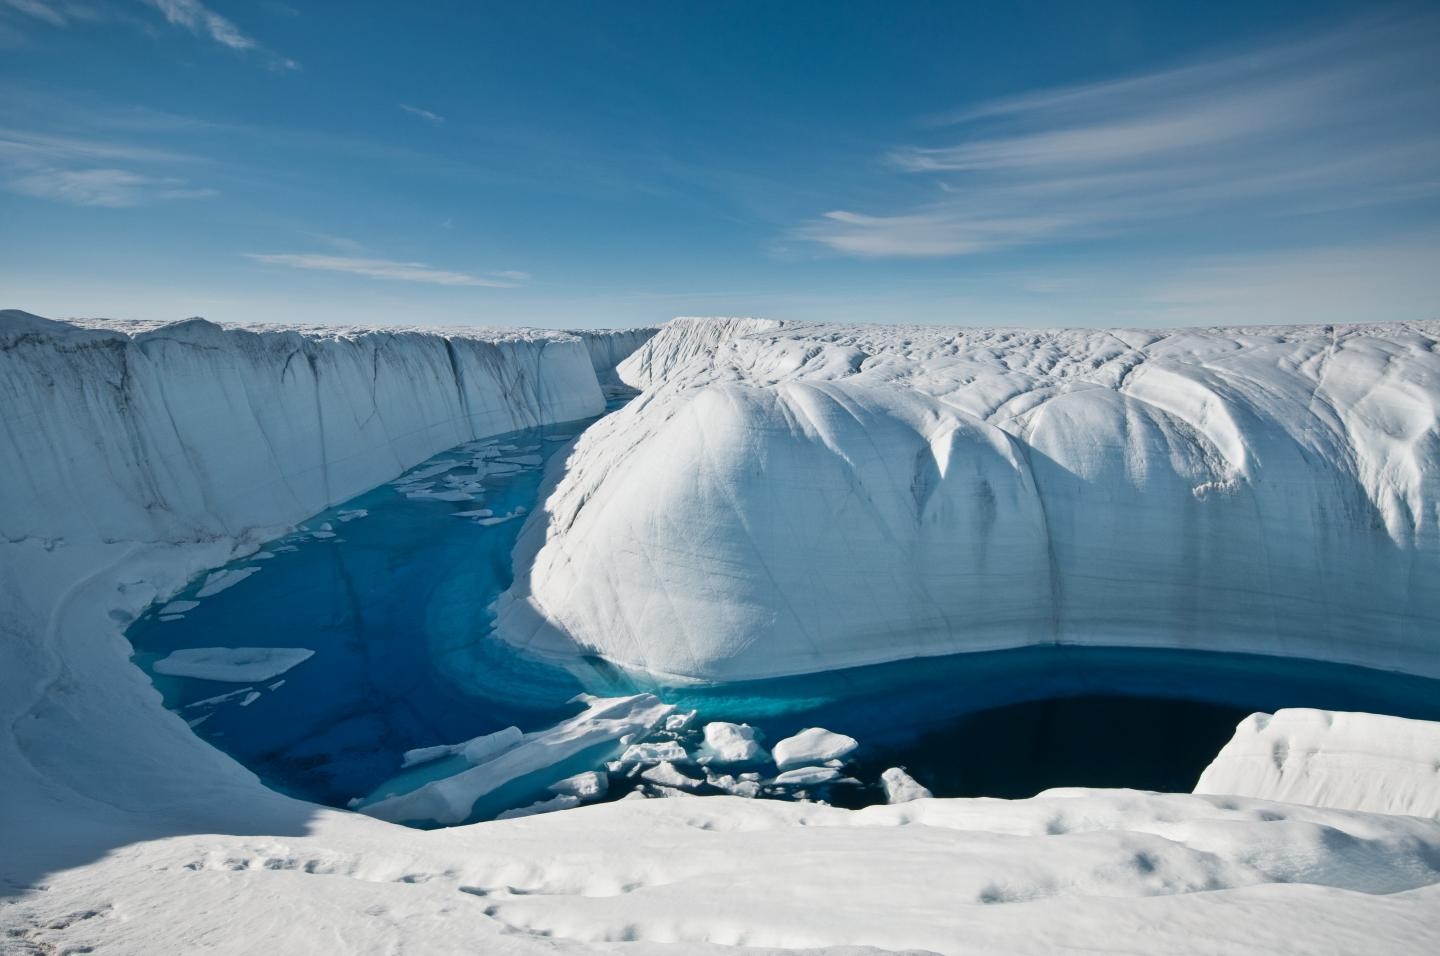 Gelo derretido passa por geleira na Groenlândia (Foto: Ian Joughin)